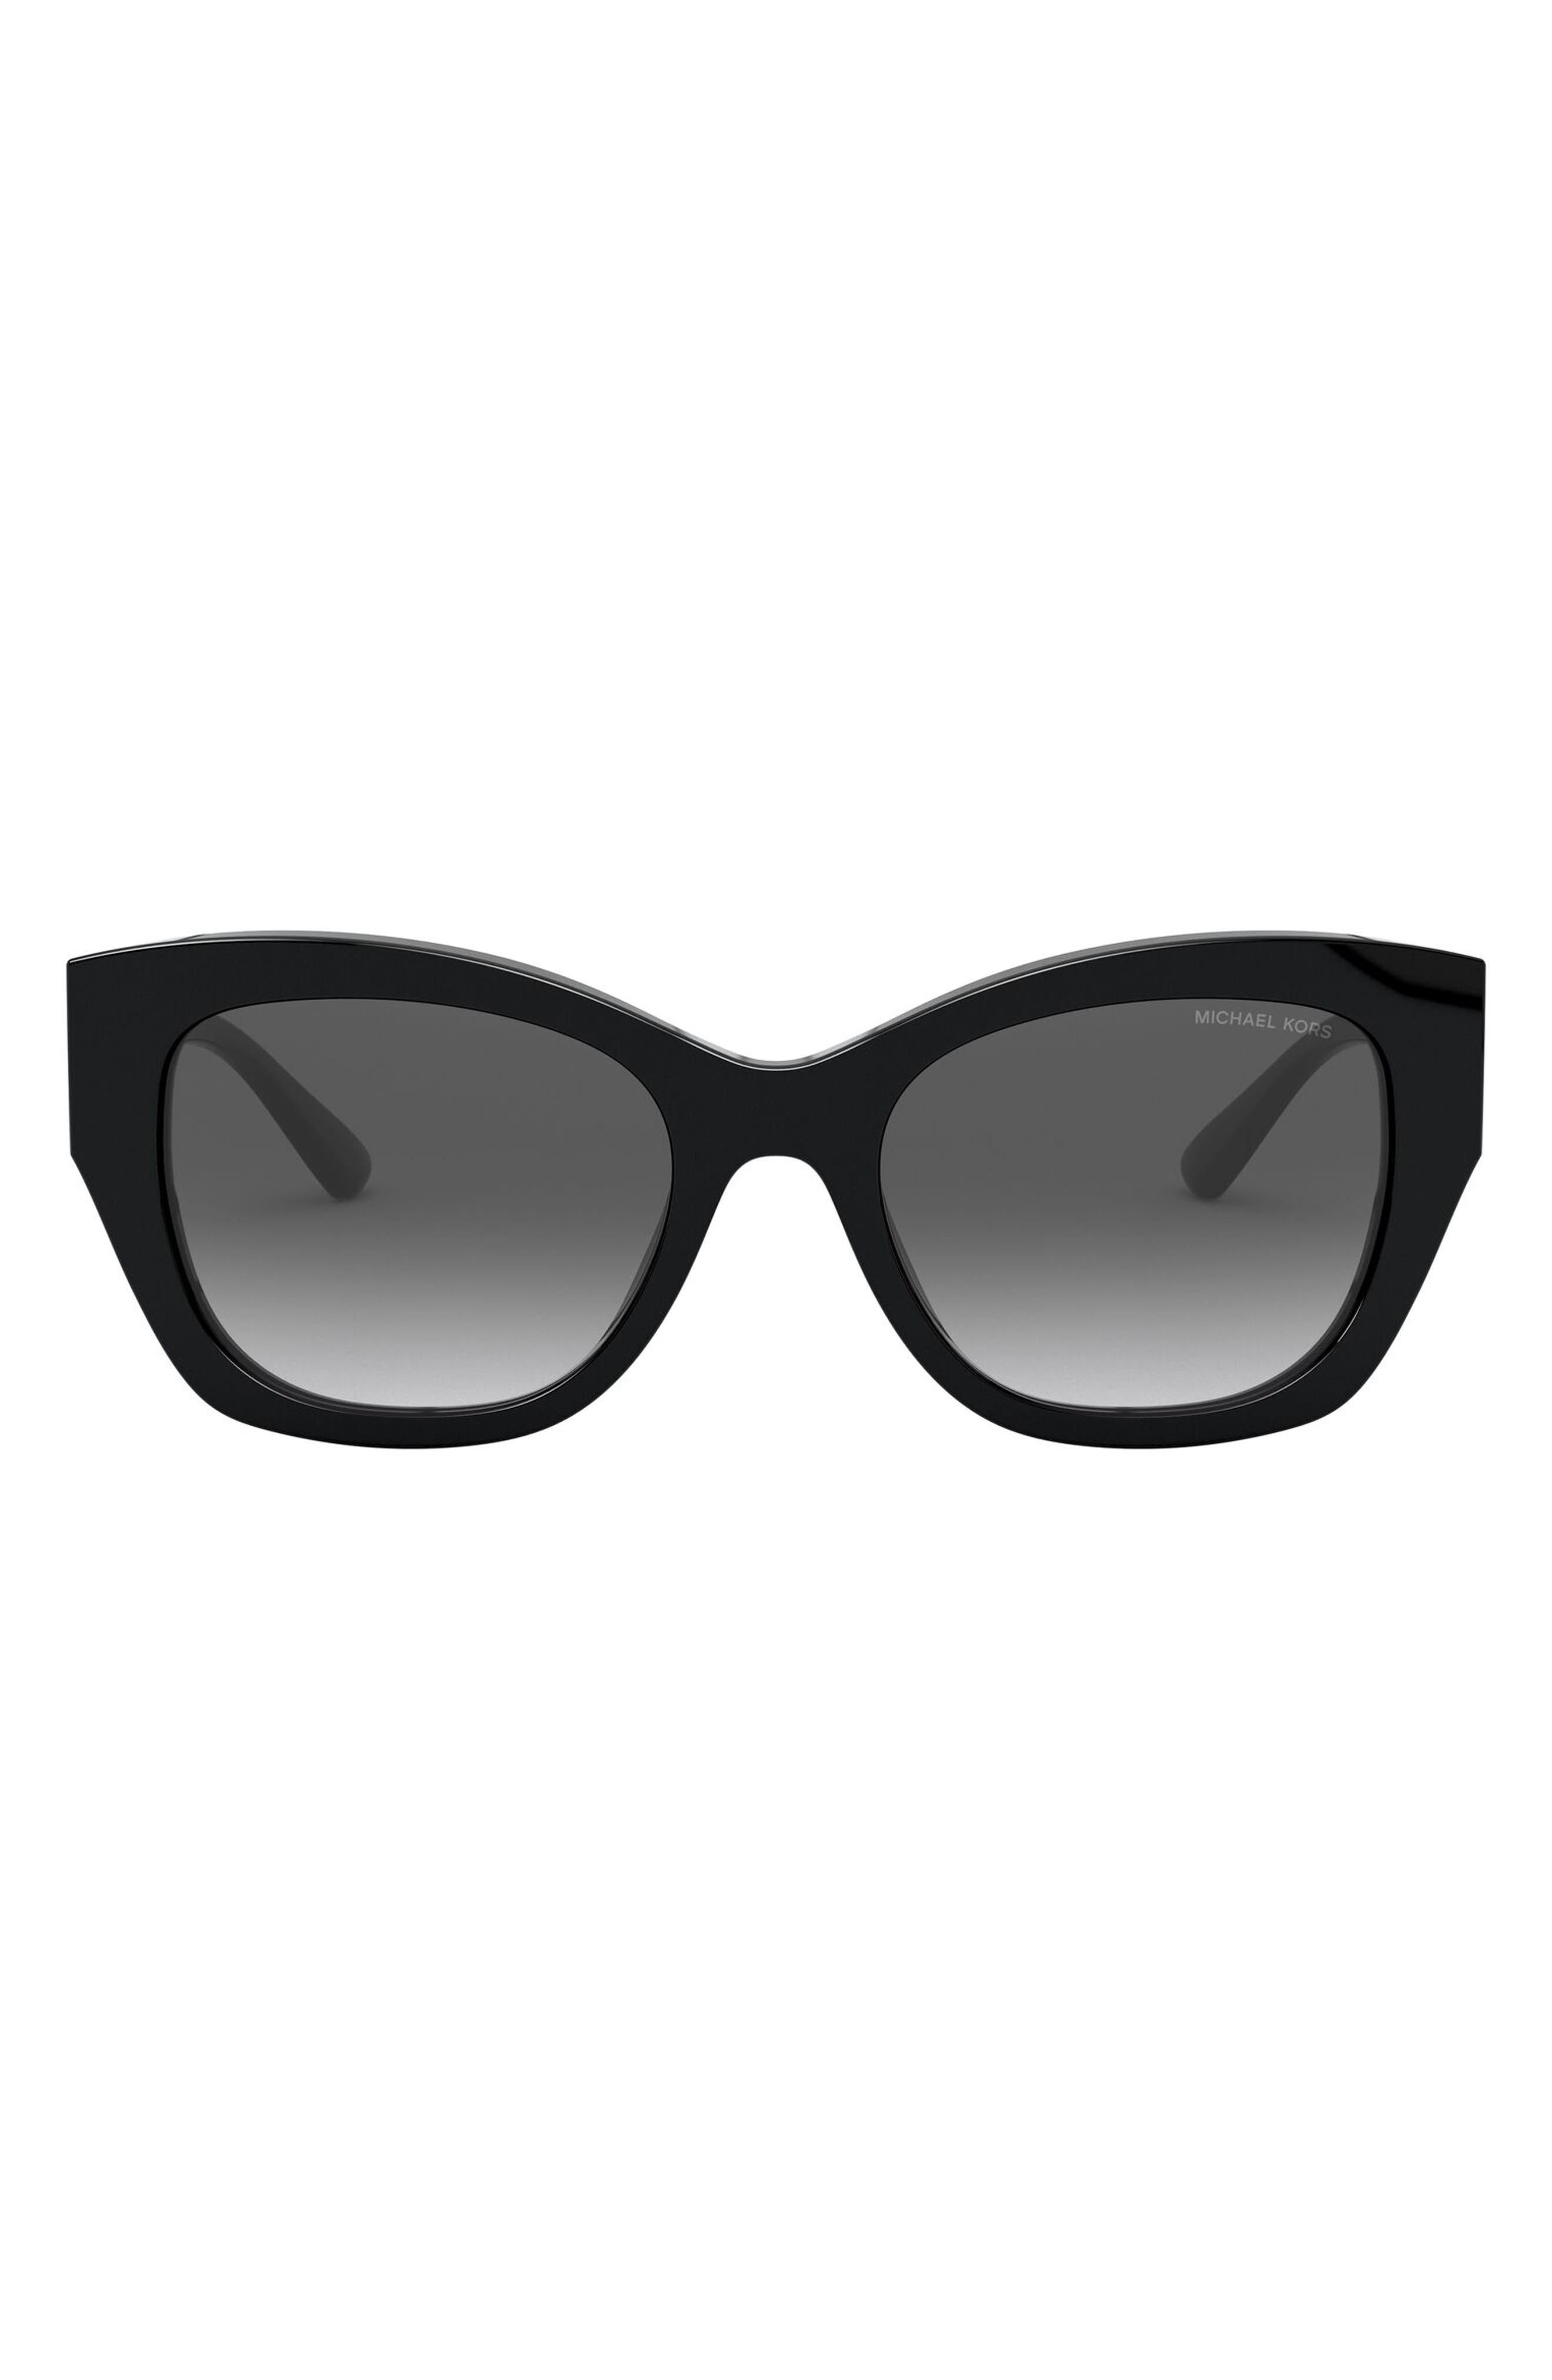 Michael Kors Sunglasses UPC & Barcode | upcitemdb.com